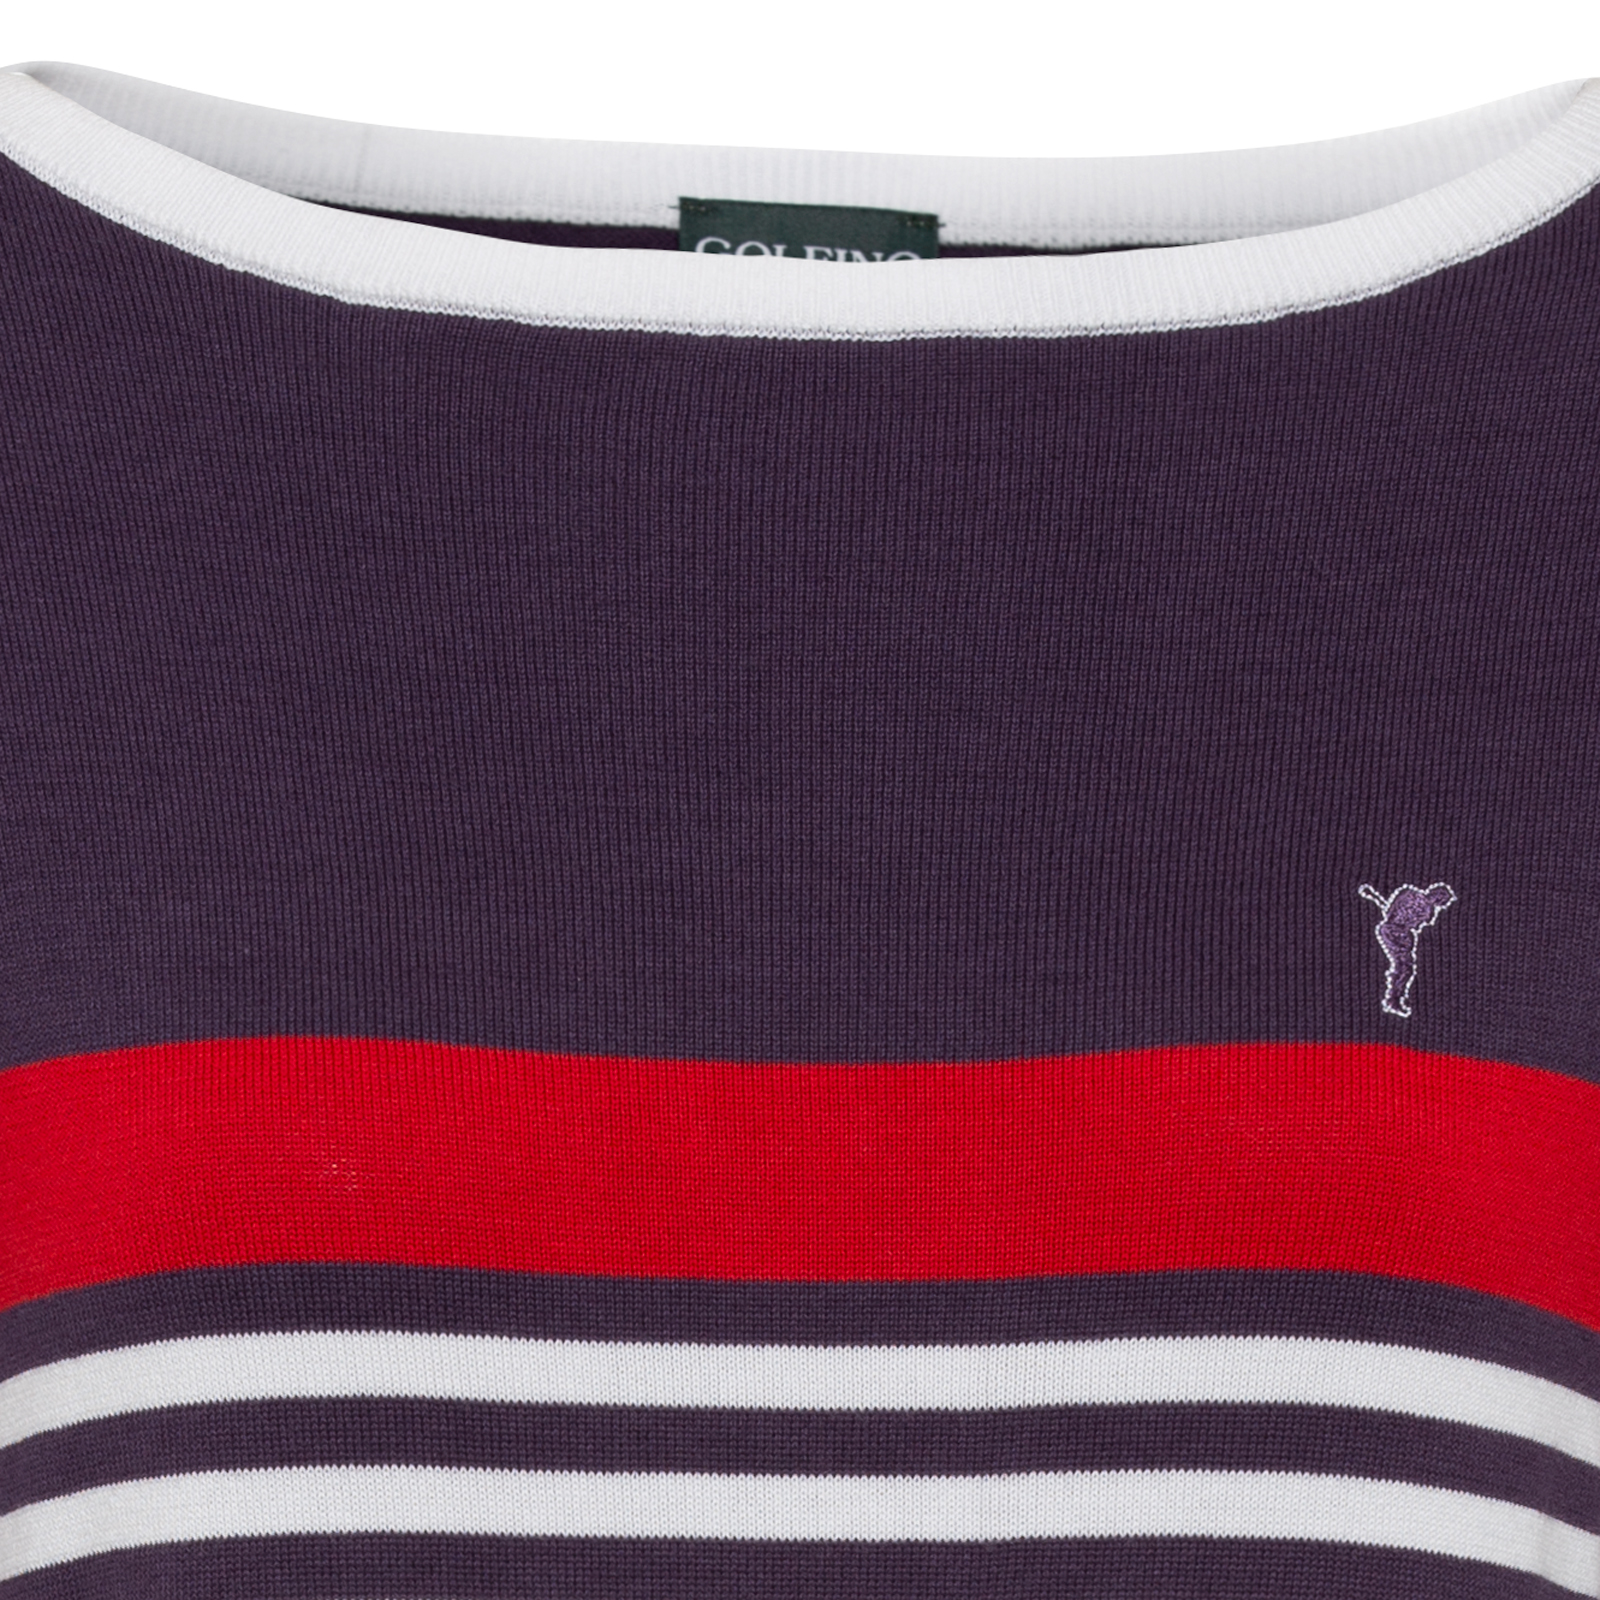 Ladies' striped Pima cotton golf sweater